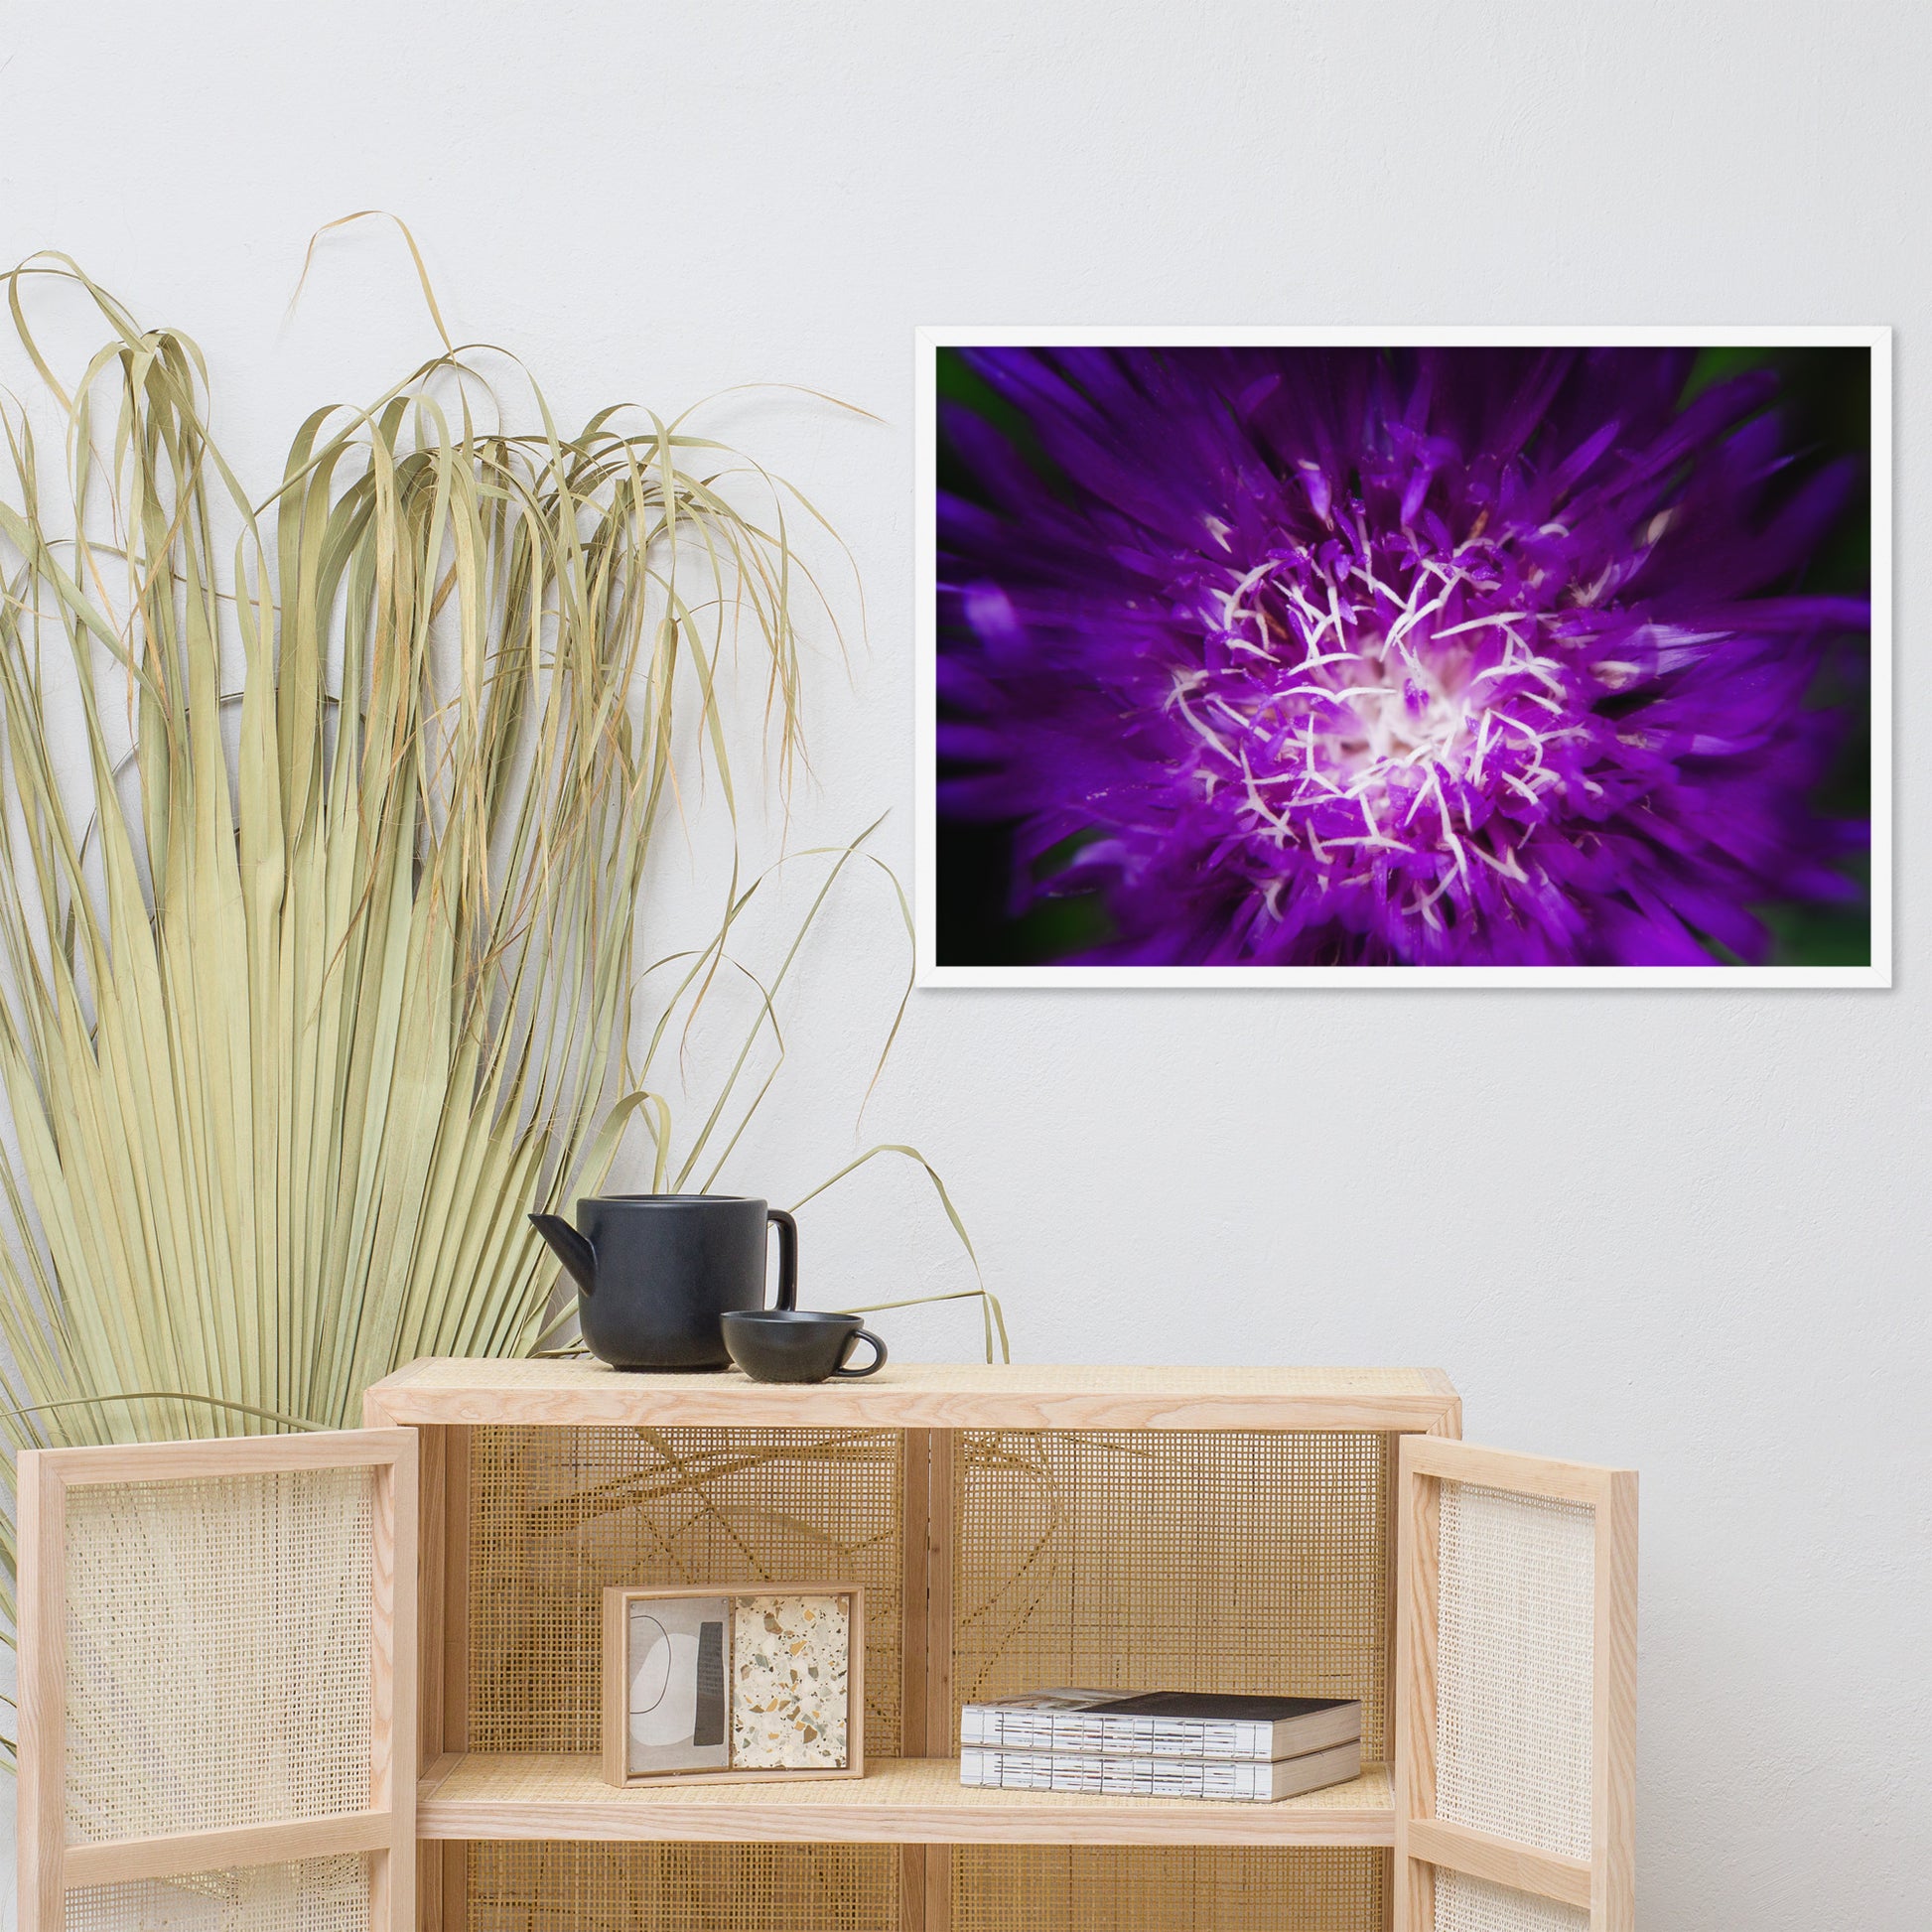 Living Room Contemporary Art: Purple Abstract Flower - Botanical / Floral / Flora / Flowers / Nature Photograph Framed Wall Art Print - Artwork - Wall Decor